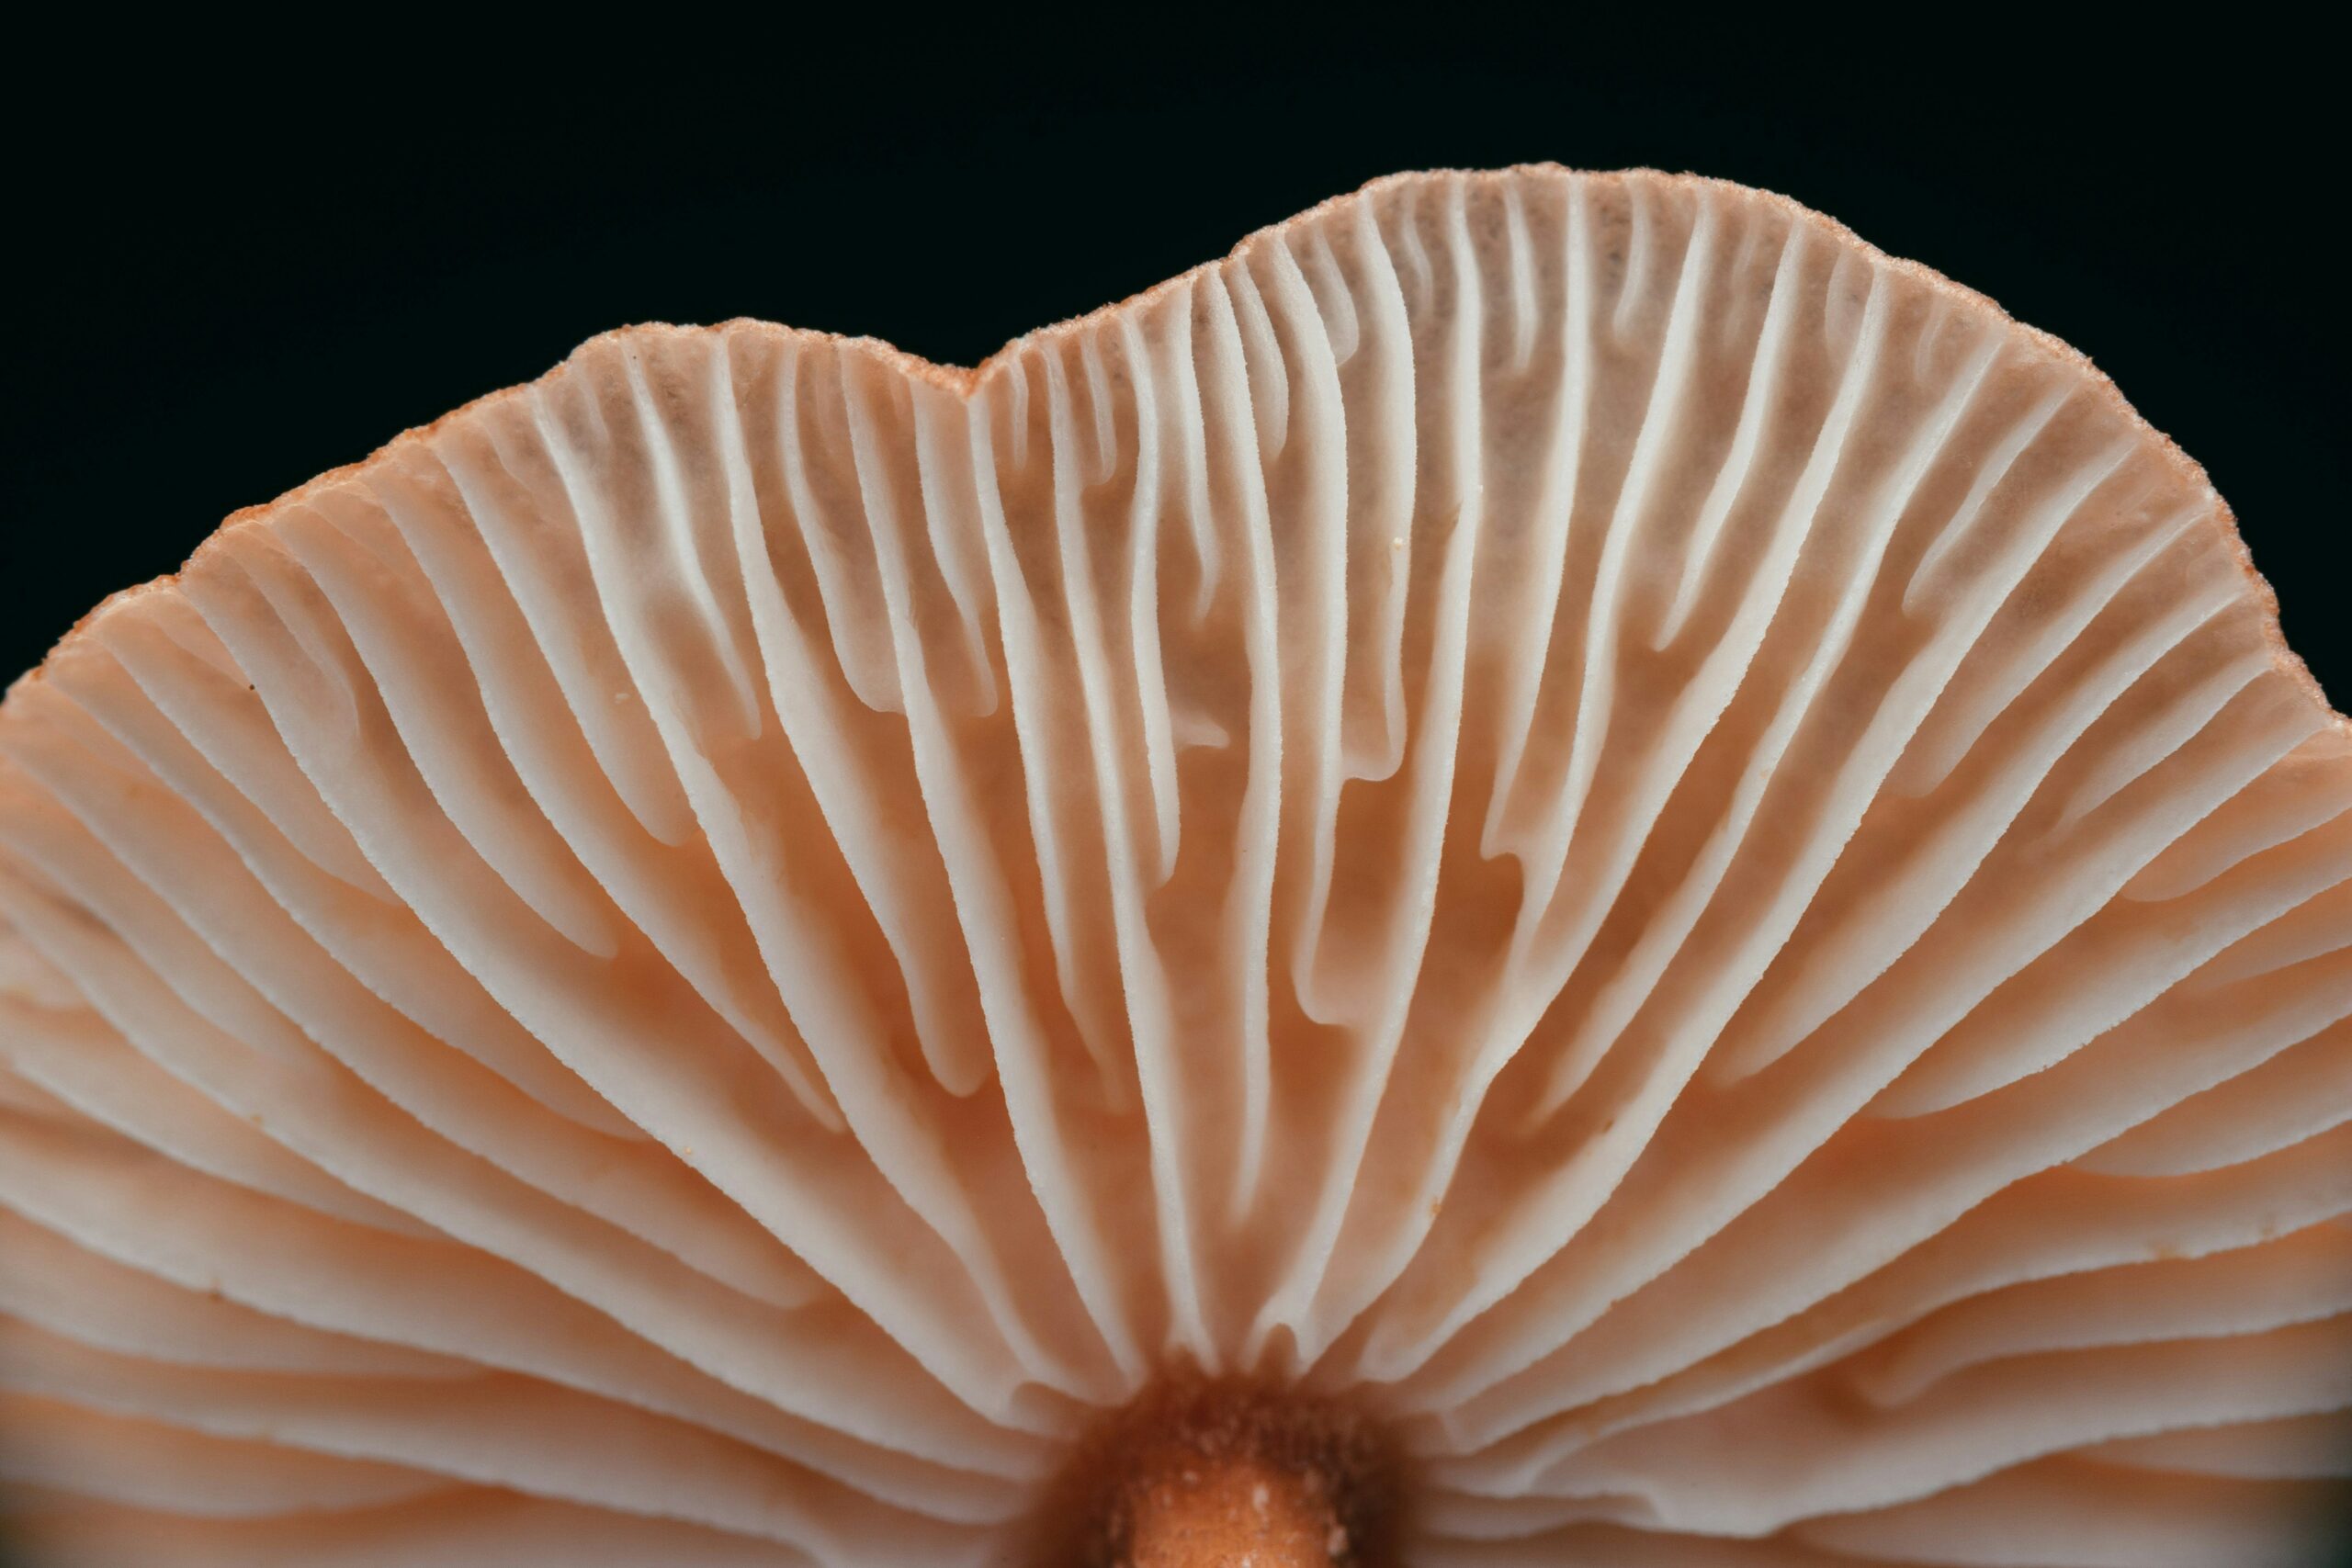 Wenn 3D-gedruckte Pilze plötzlich Musik machen: Pilzmyzel als umweltfreundlicher Superstar im Lautsprecheruniversum!